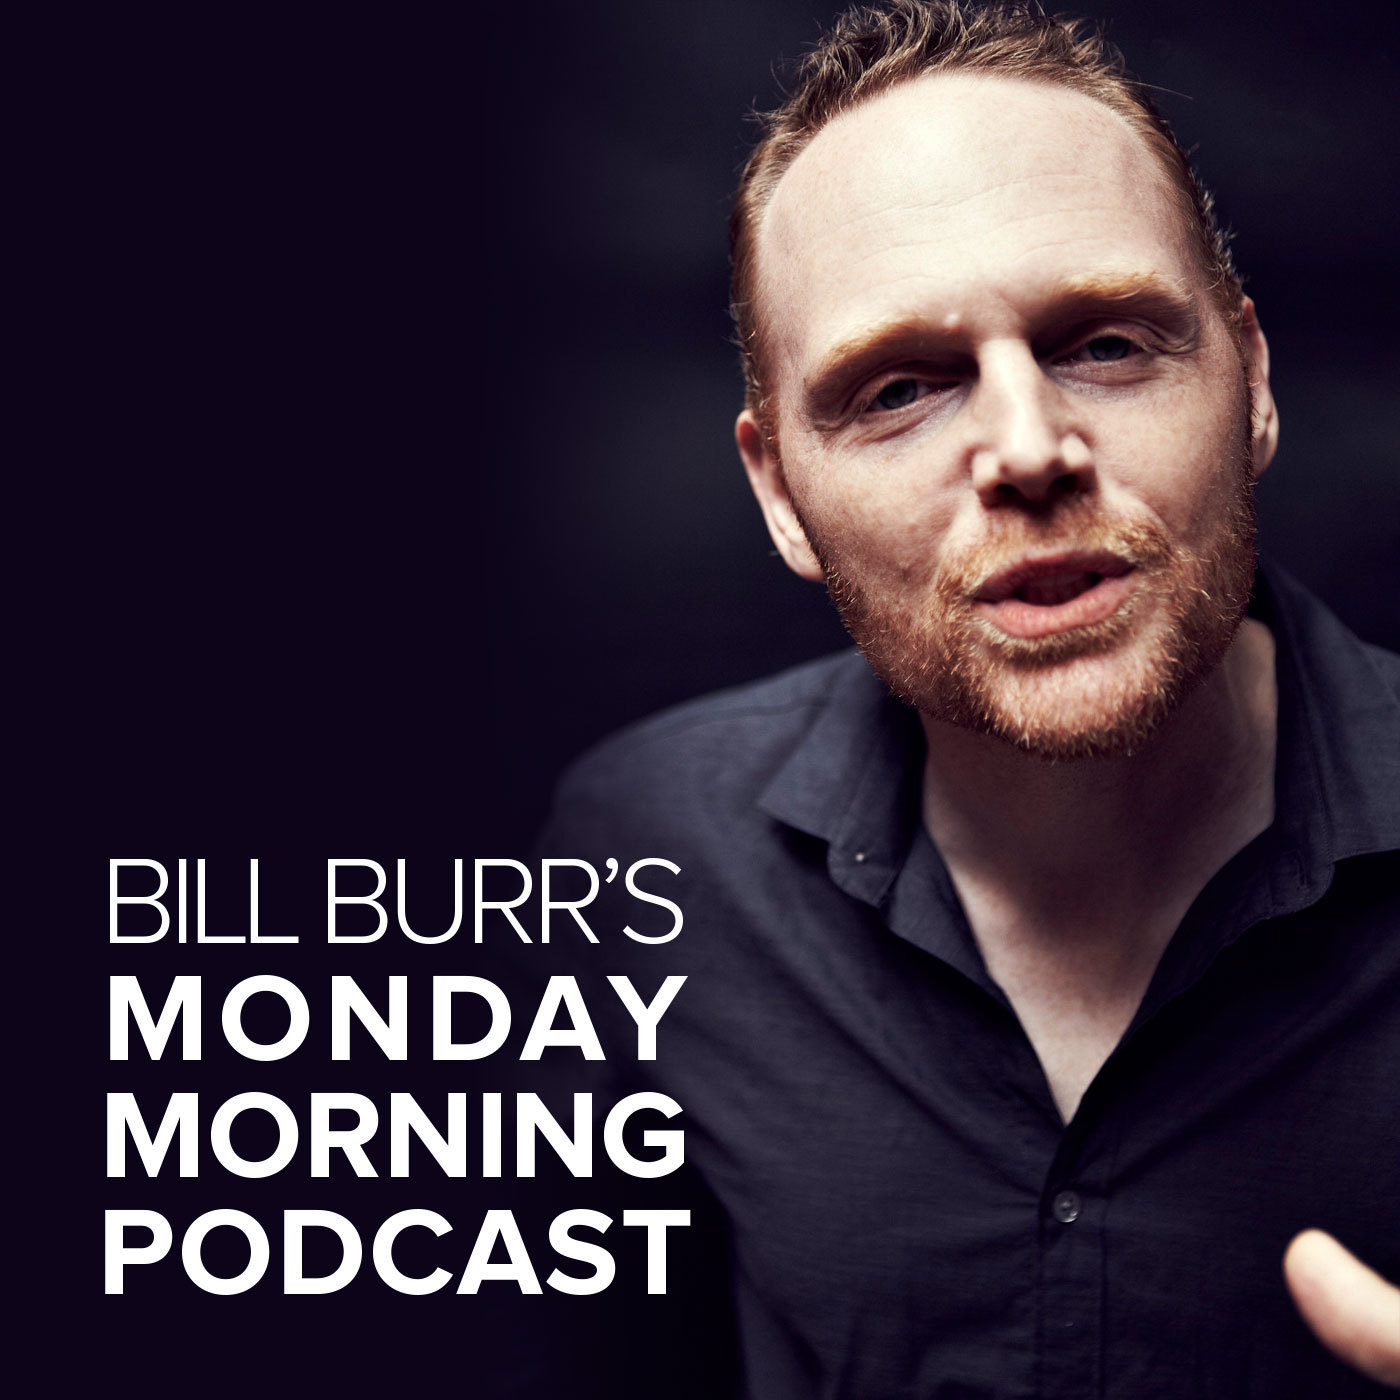 Monday Morning Podcast 10-21-19